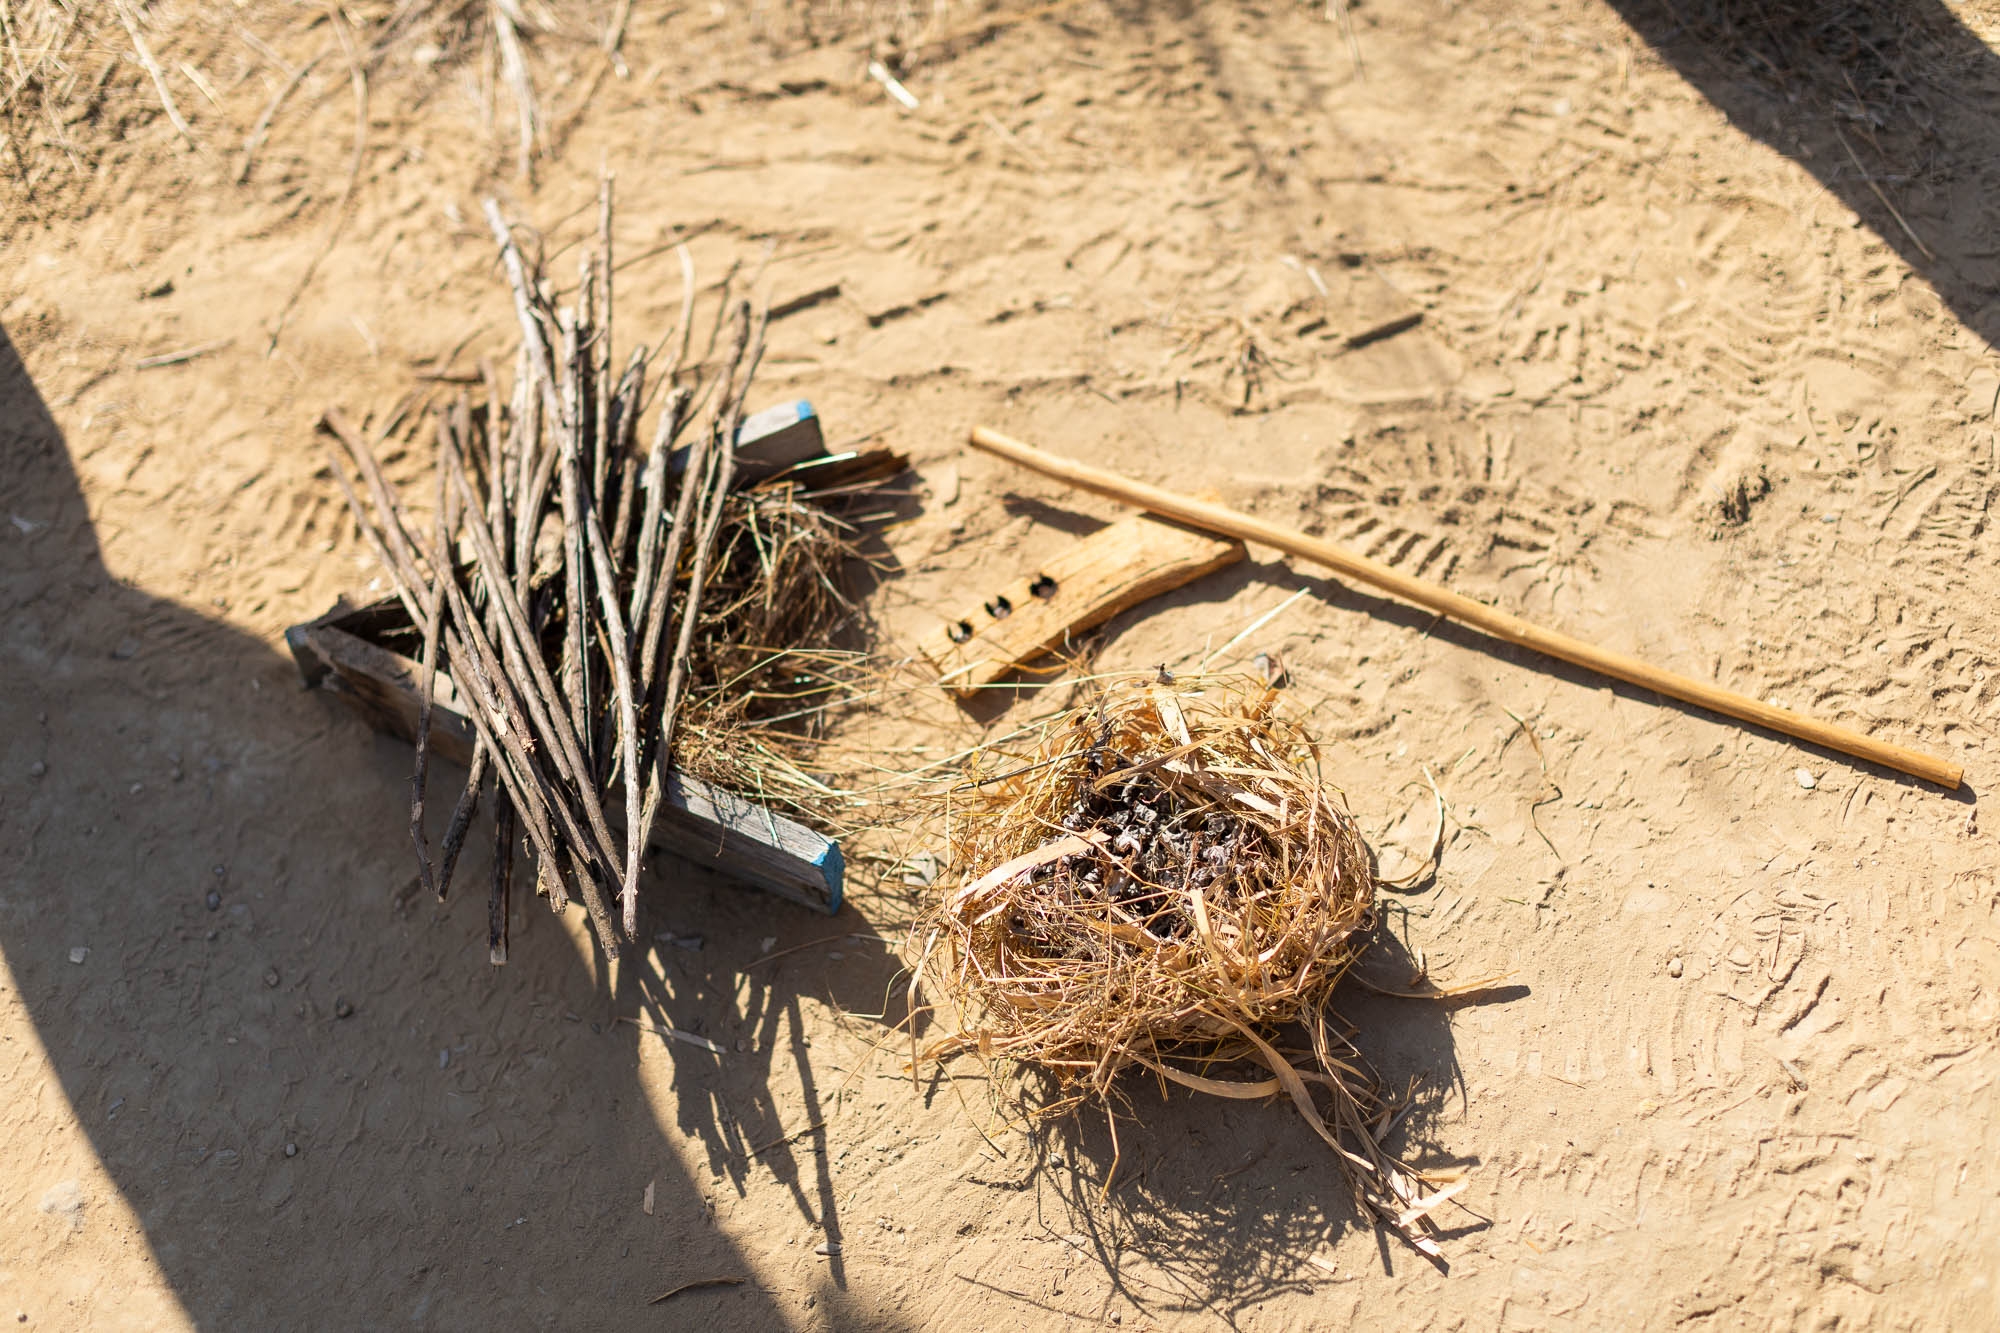 An elderberry drill, hearth of California buckeye wood, mugwort tinder, and a few other sticks arranged on the ground.